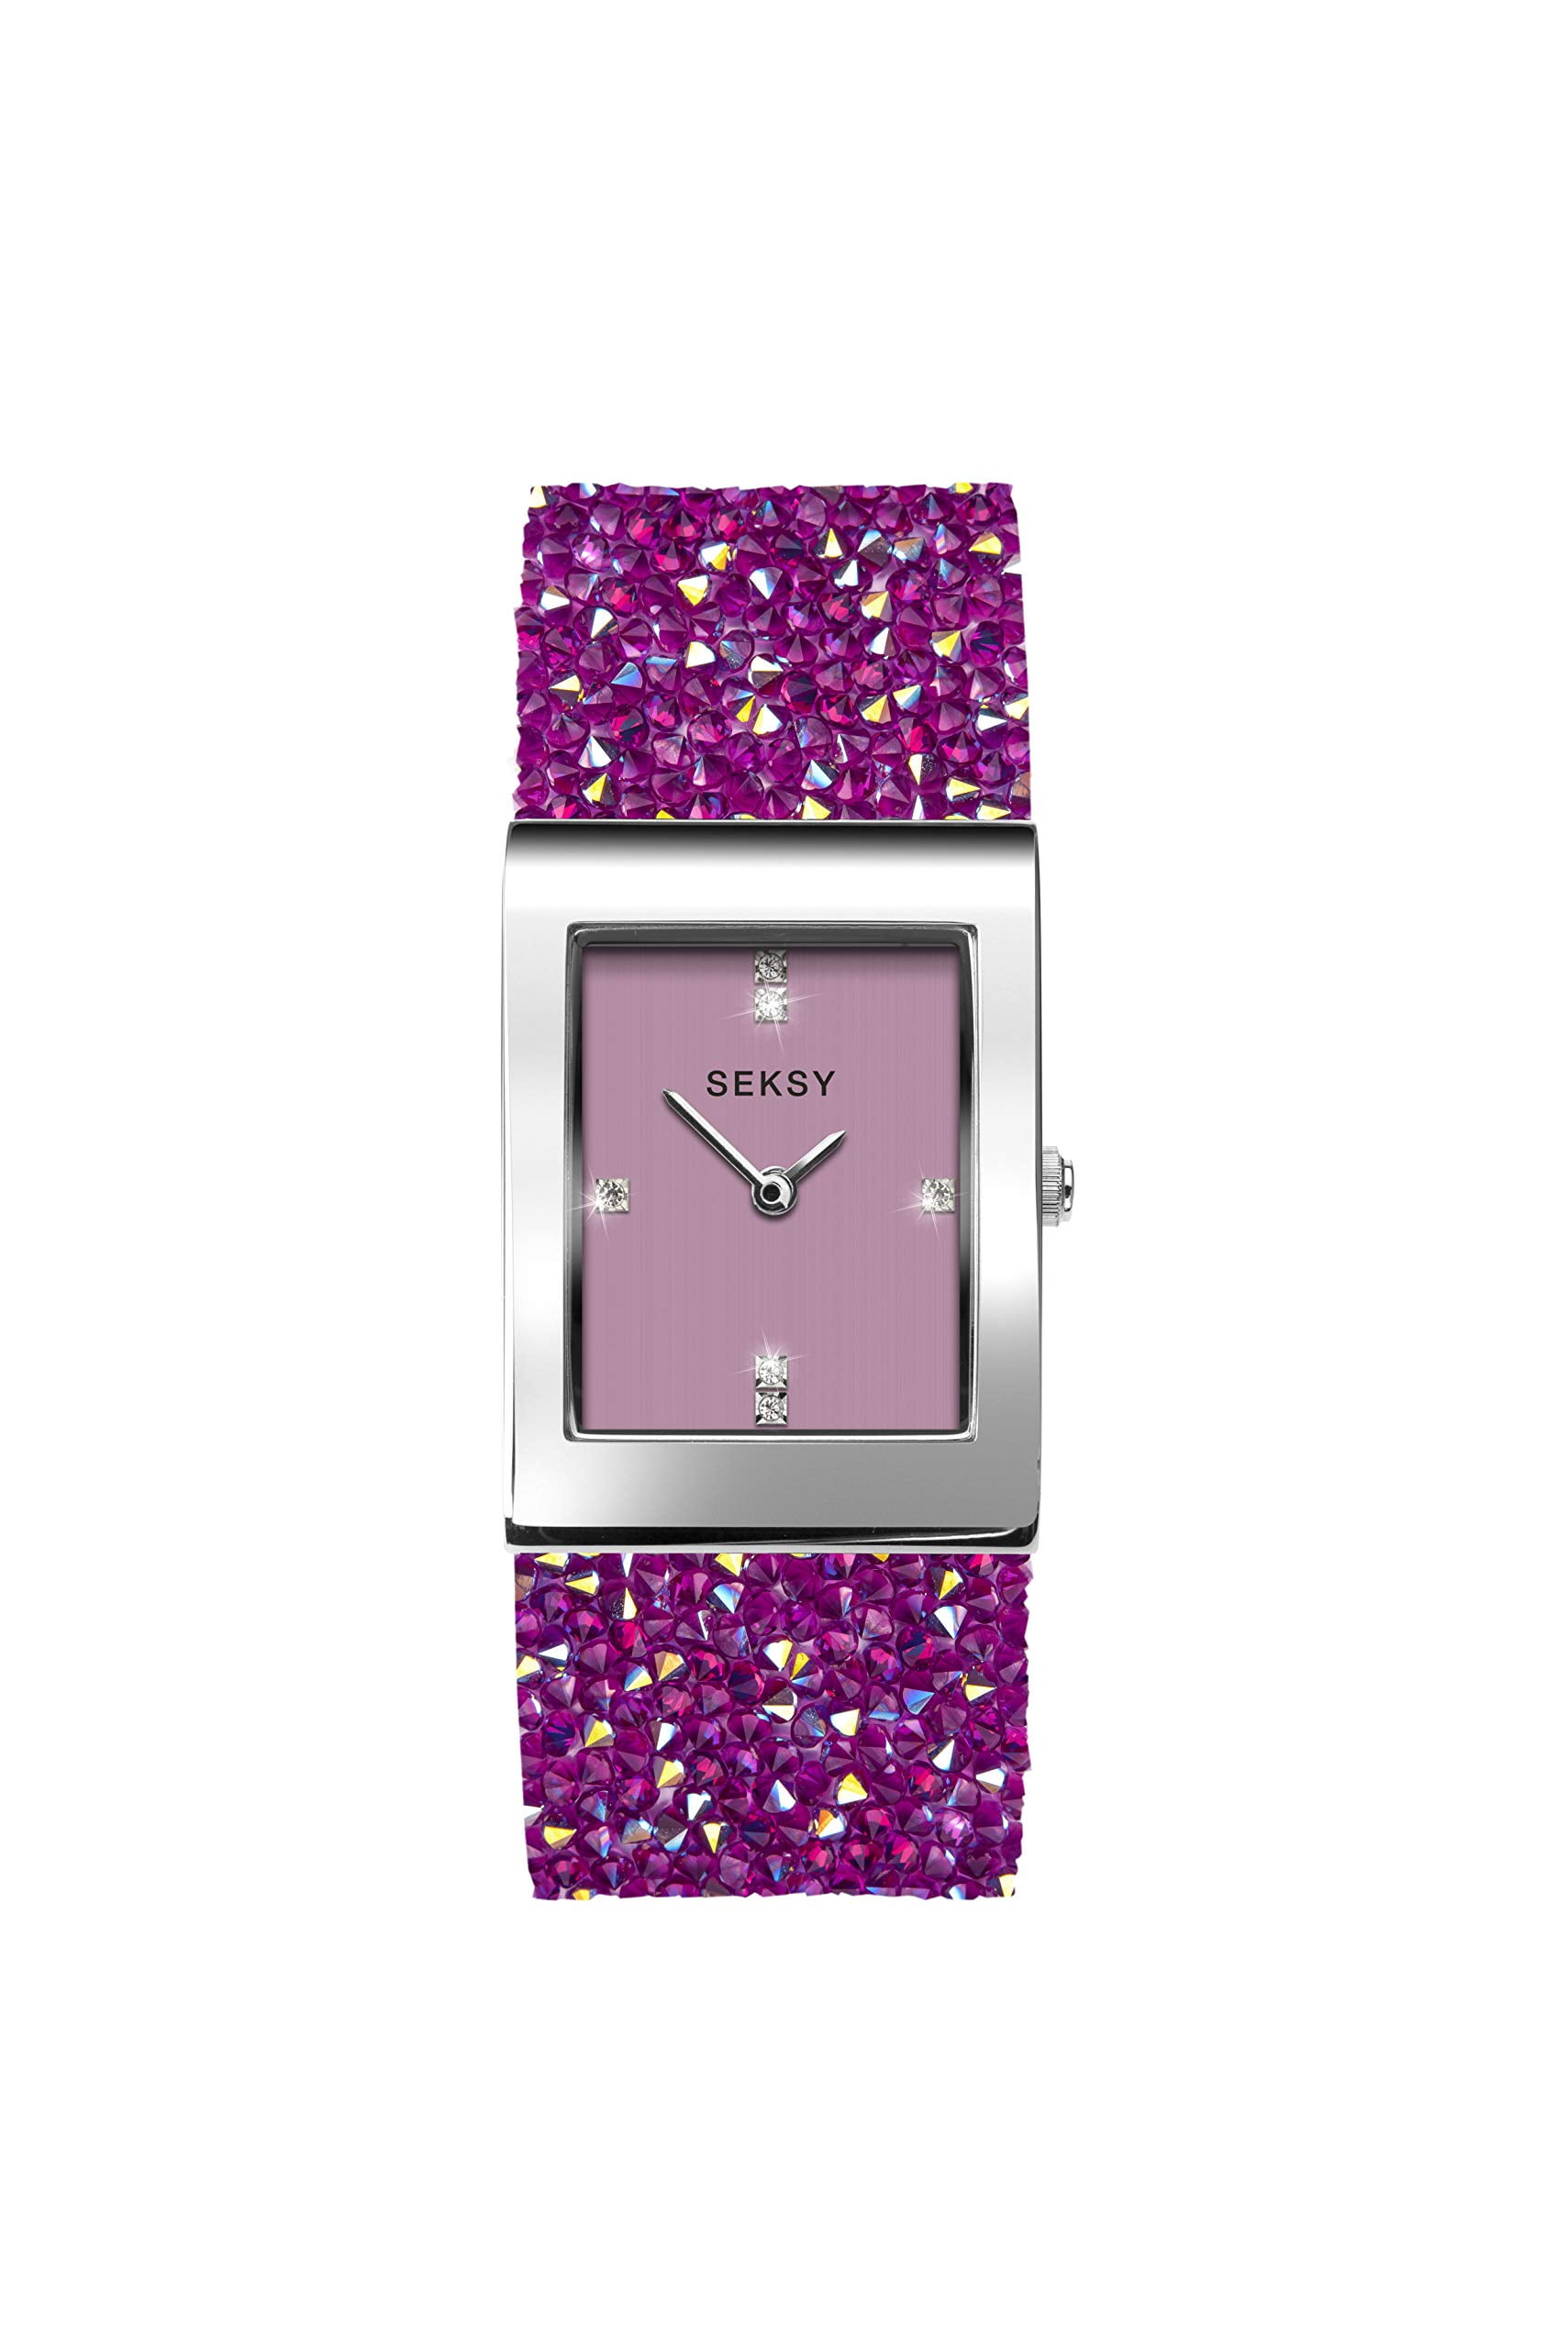 Maan oppervlakte versieren Mangel Women's Swarovski Crystal SEKSY Bracelet Watch Made with Swarovski Crystals  on Strap, Water Resistant, Adjustable (Pink Rocks) - Walmart.com